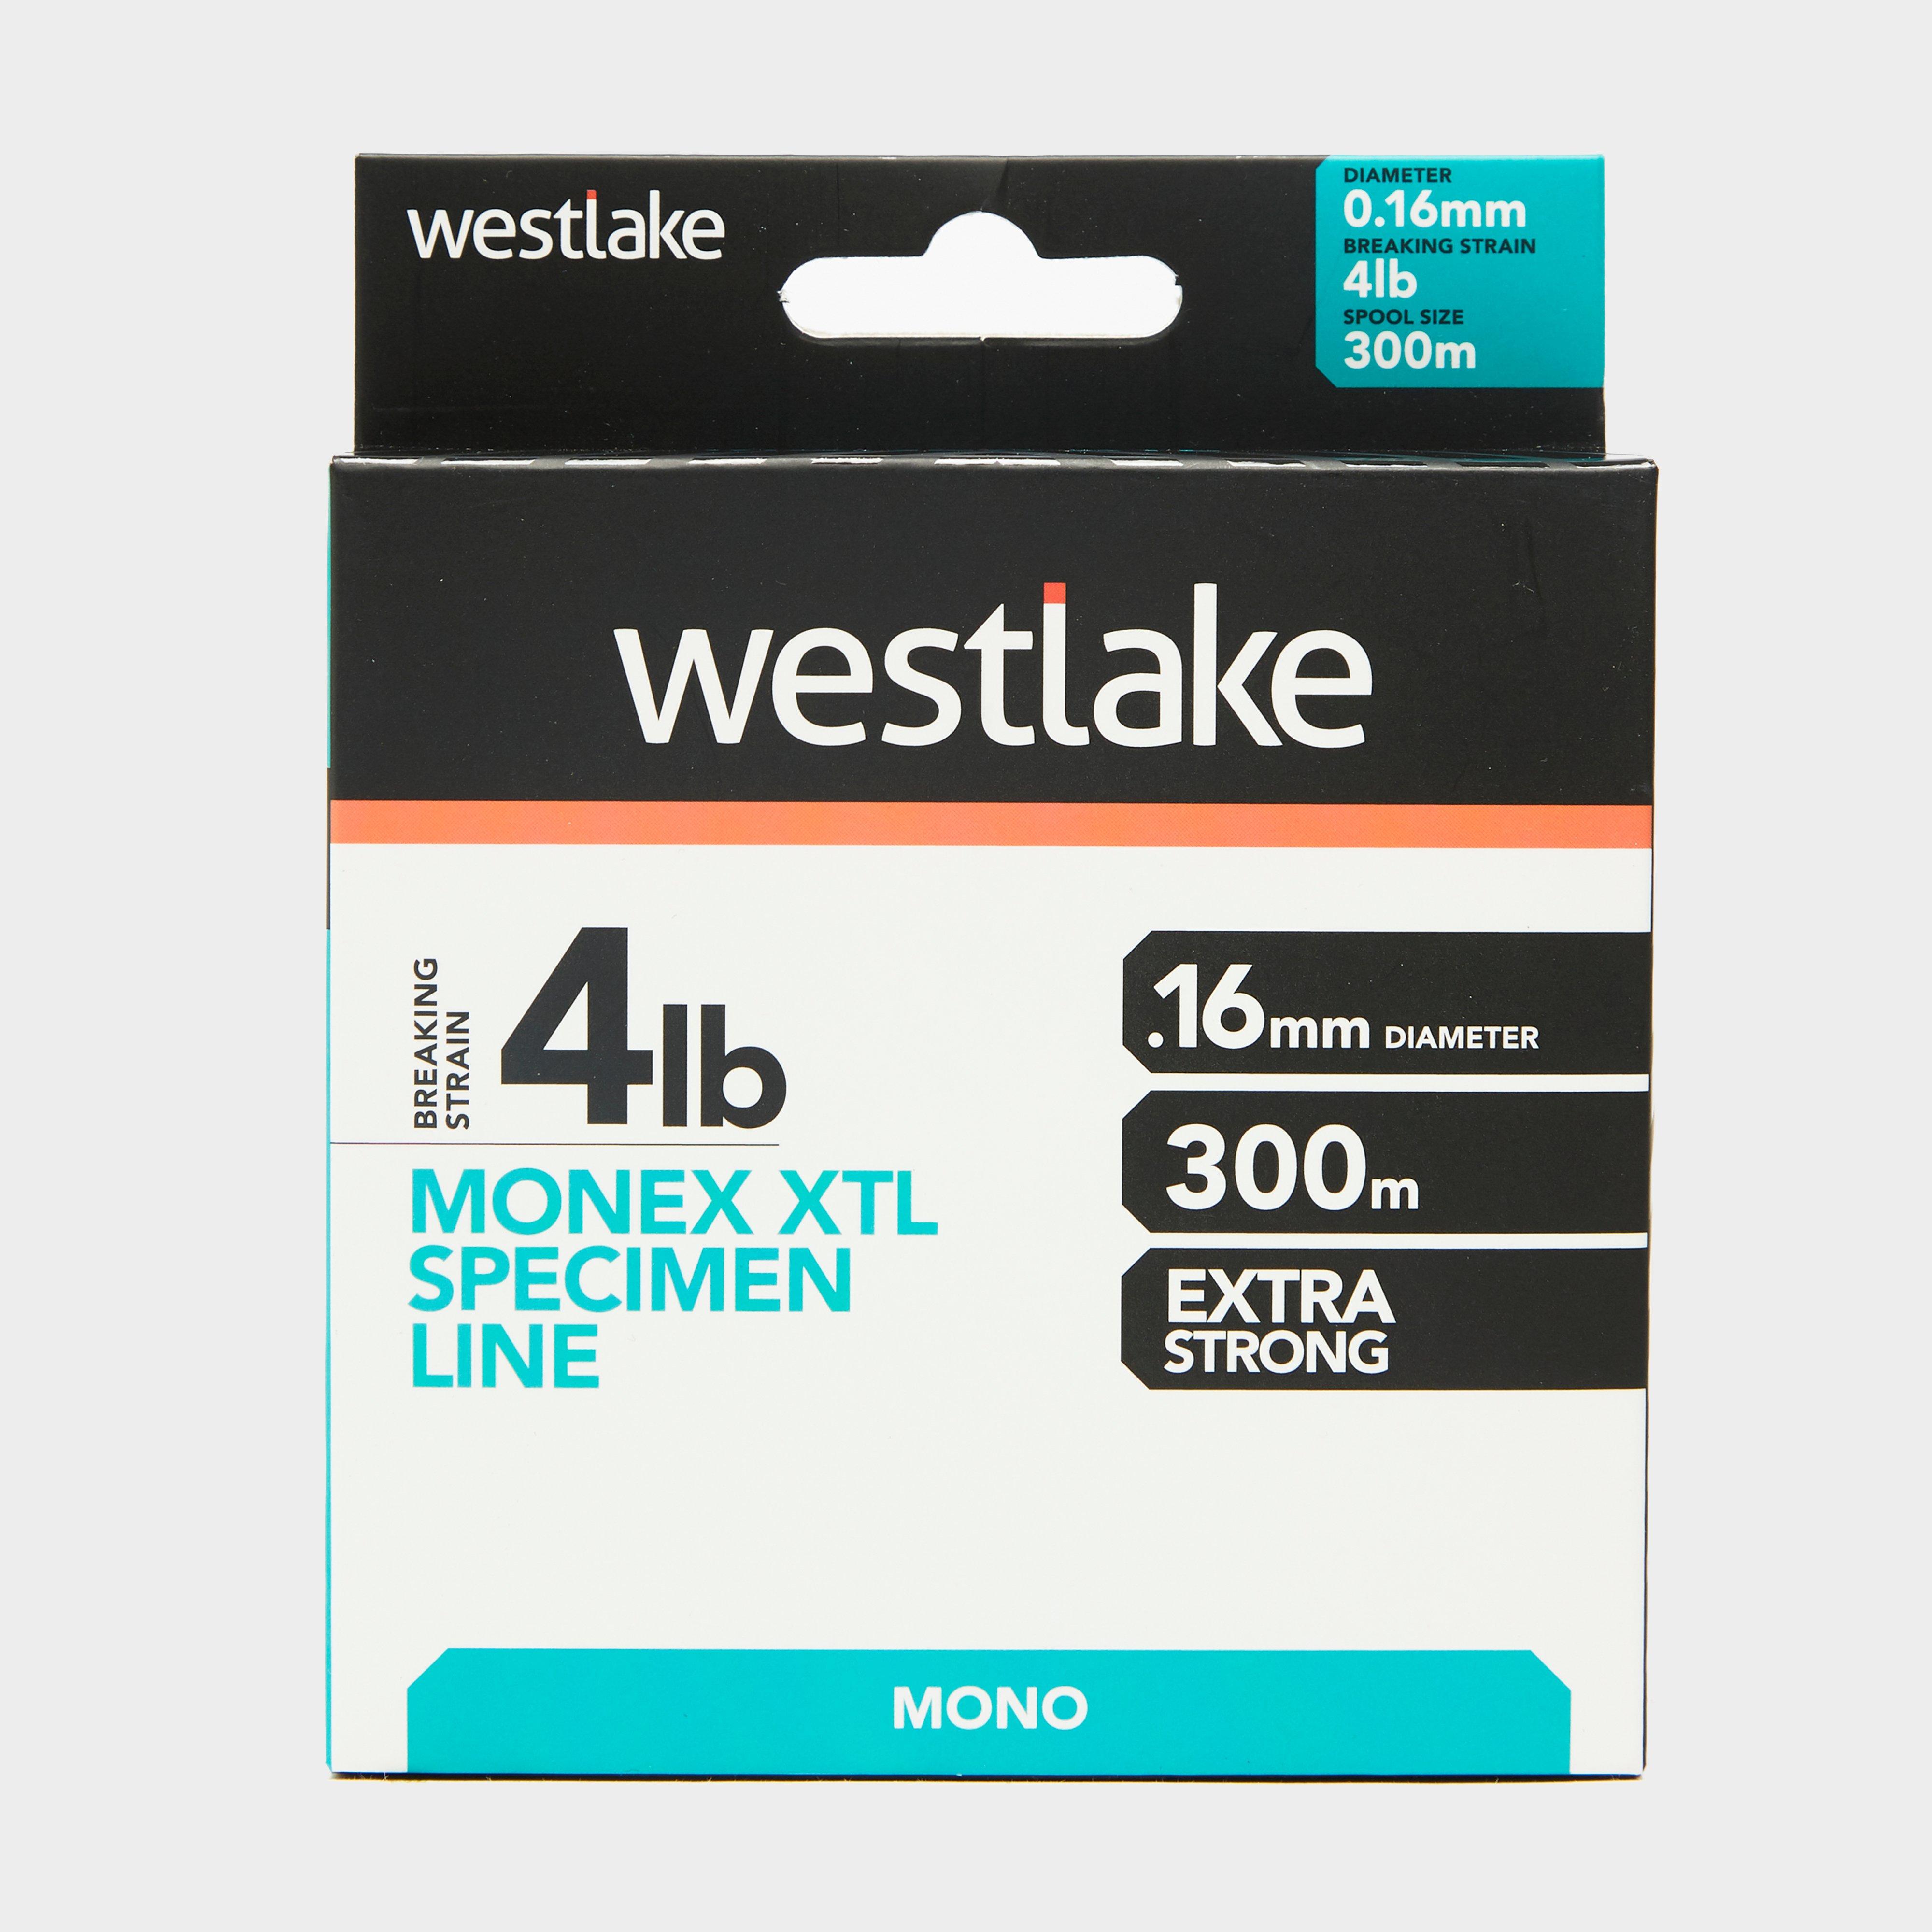 Westlake Xl Specimen Mono 4lb 18mm 300m  Multi Coloured